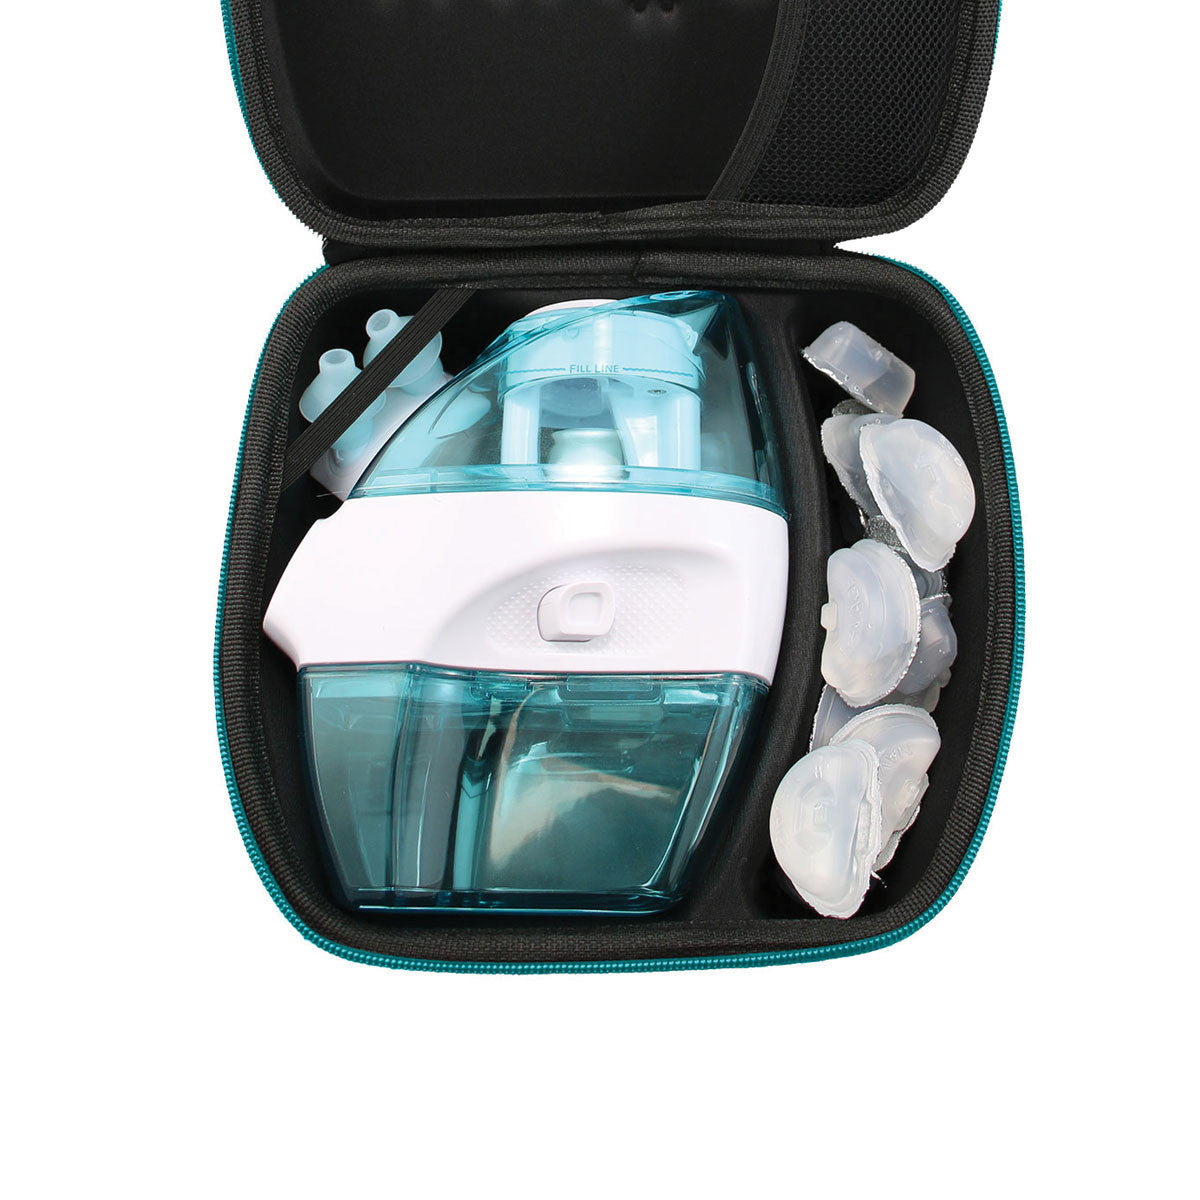 Navage Essentials Bundle - Navage Nasal Irrigation System - Saline Nasal  Rinse Kit with 1 Navage Nose Cleaner, 30 Salt Pods and 1 Countertop Caddy